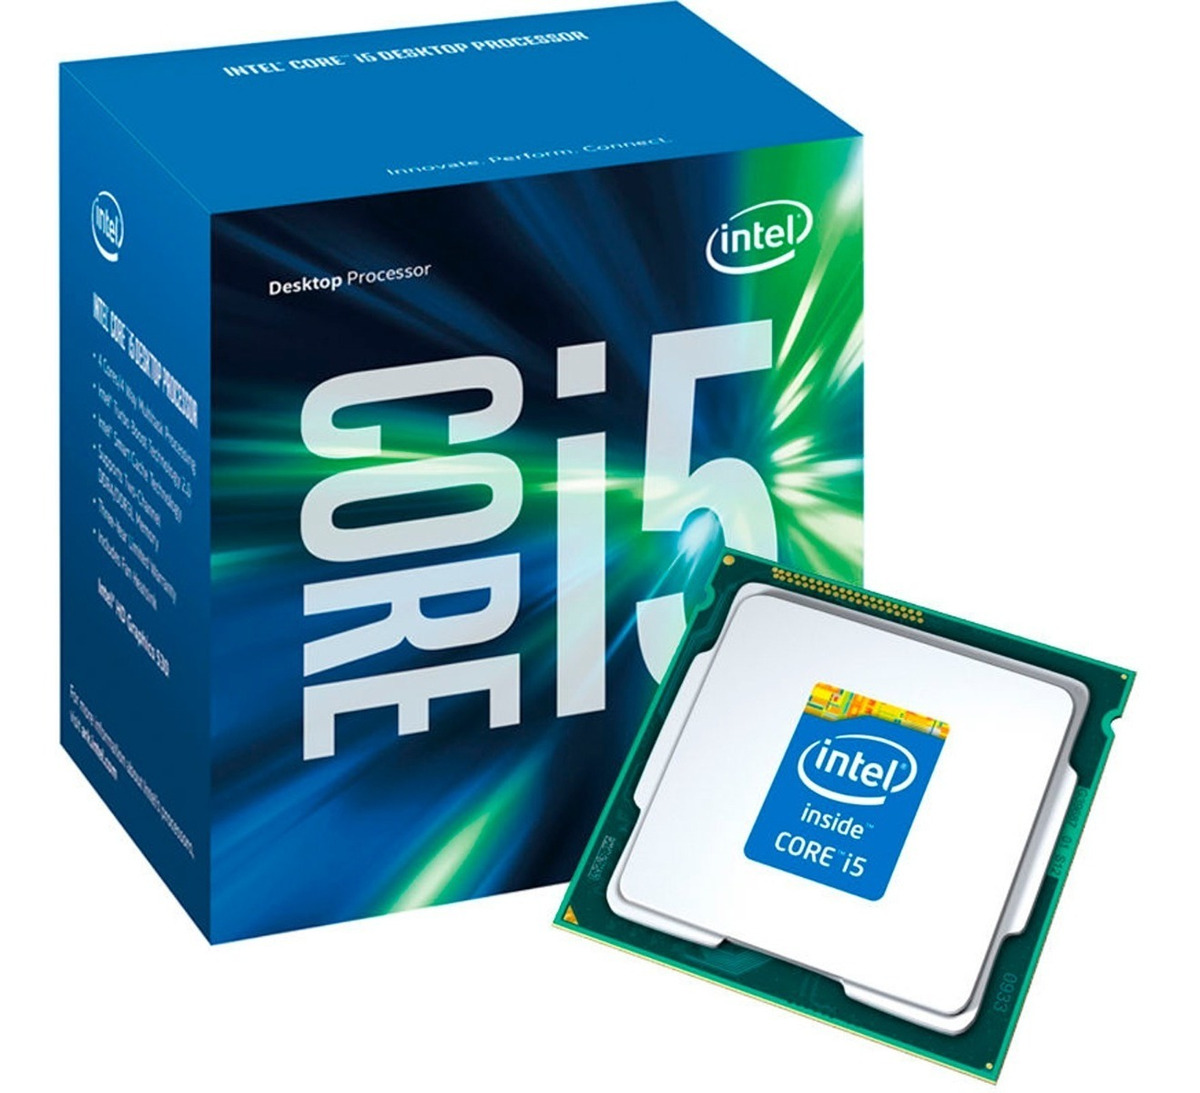 Intel core gold. Процессор Intel Core i5. Core i5-7400 lga1151. Процессор Интел коре i5. Процессор Интел кор ай 5.